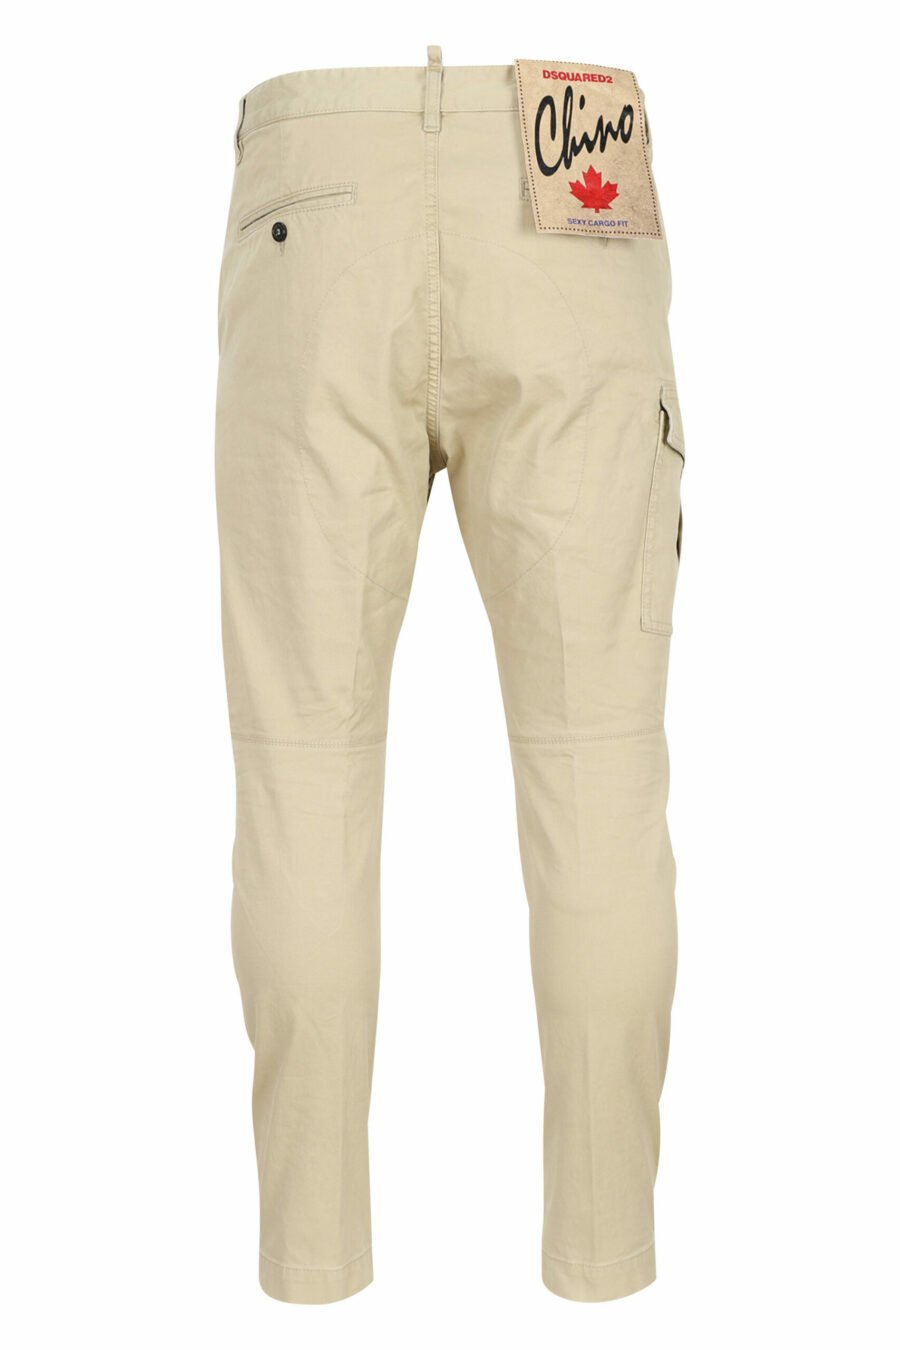 Pantalon cargo sexy beige avec poches latérales - 8052134973615 2 échelle